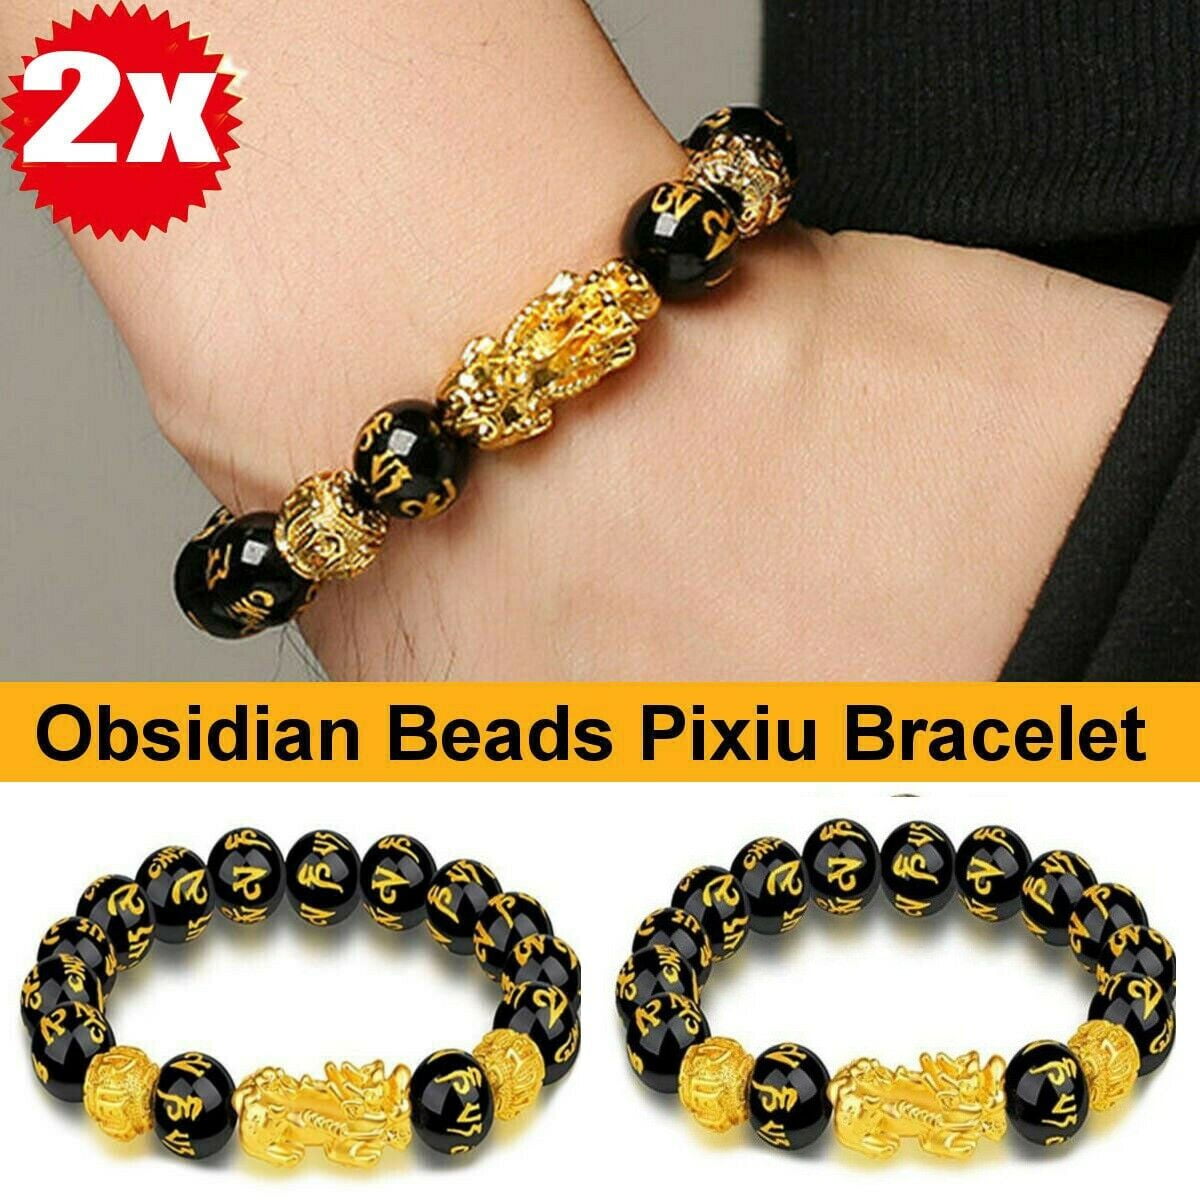 Feng Shui Obsidian Pixiu Bracelet Attract Wealth /& Good Luck Jewelry Chic l